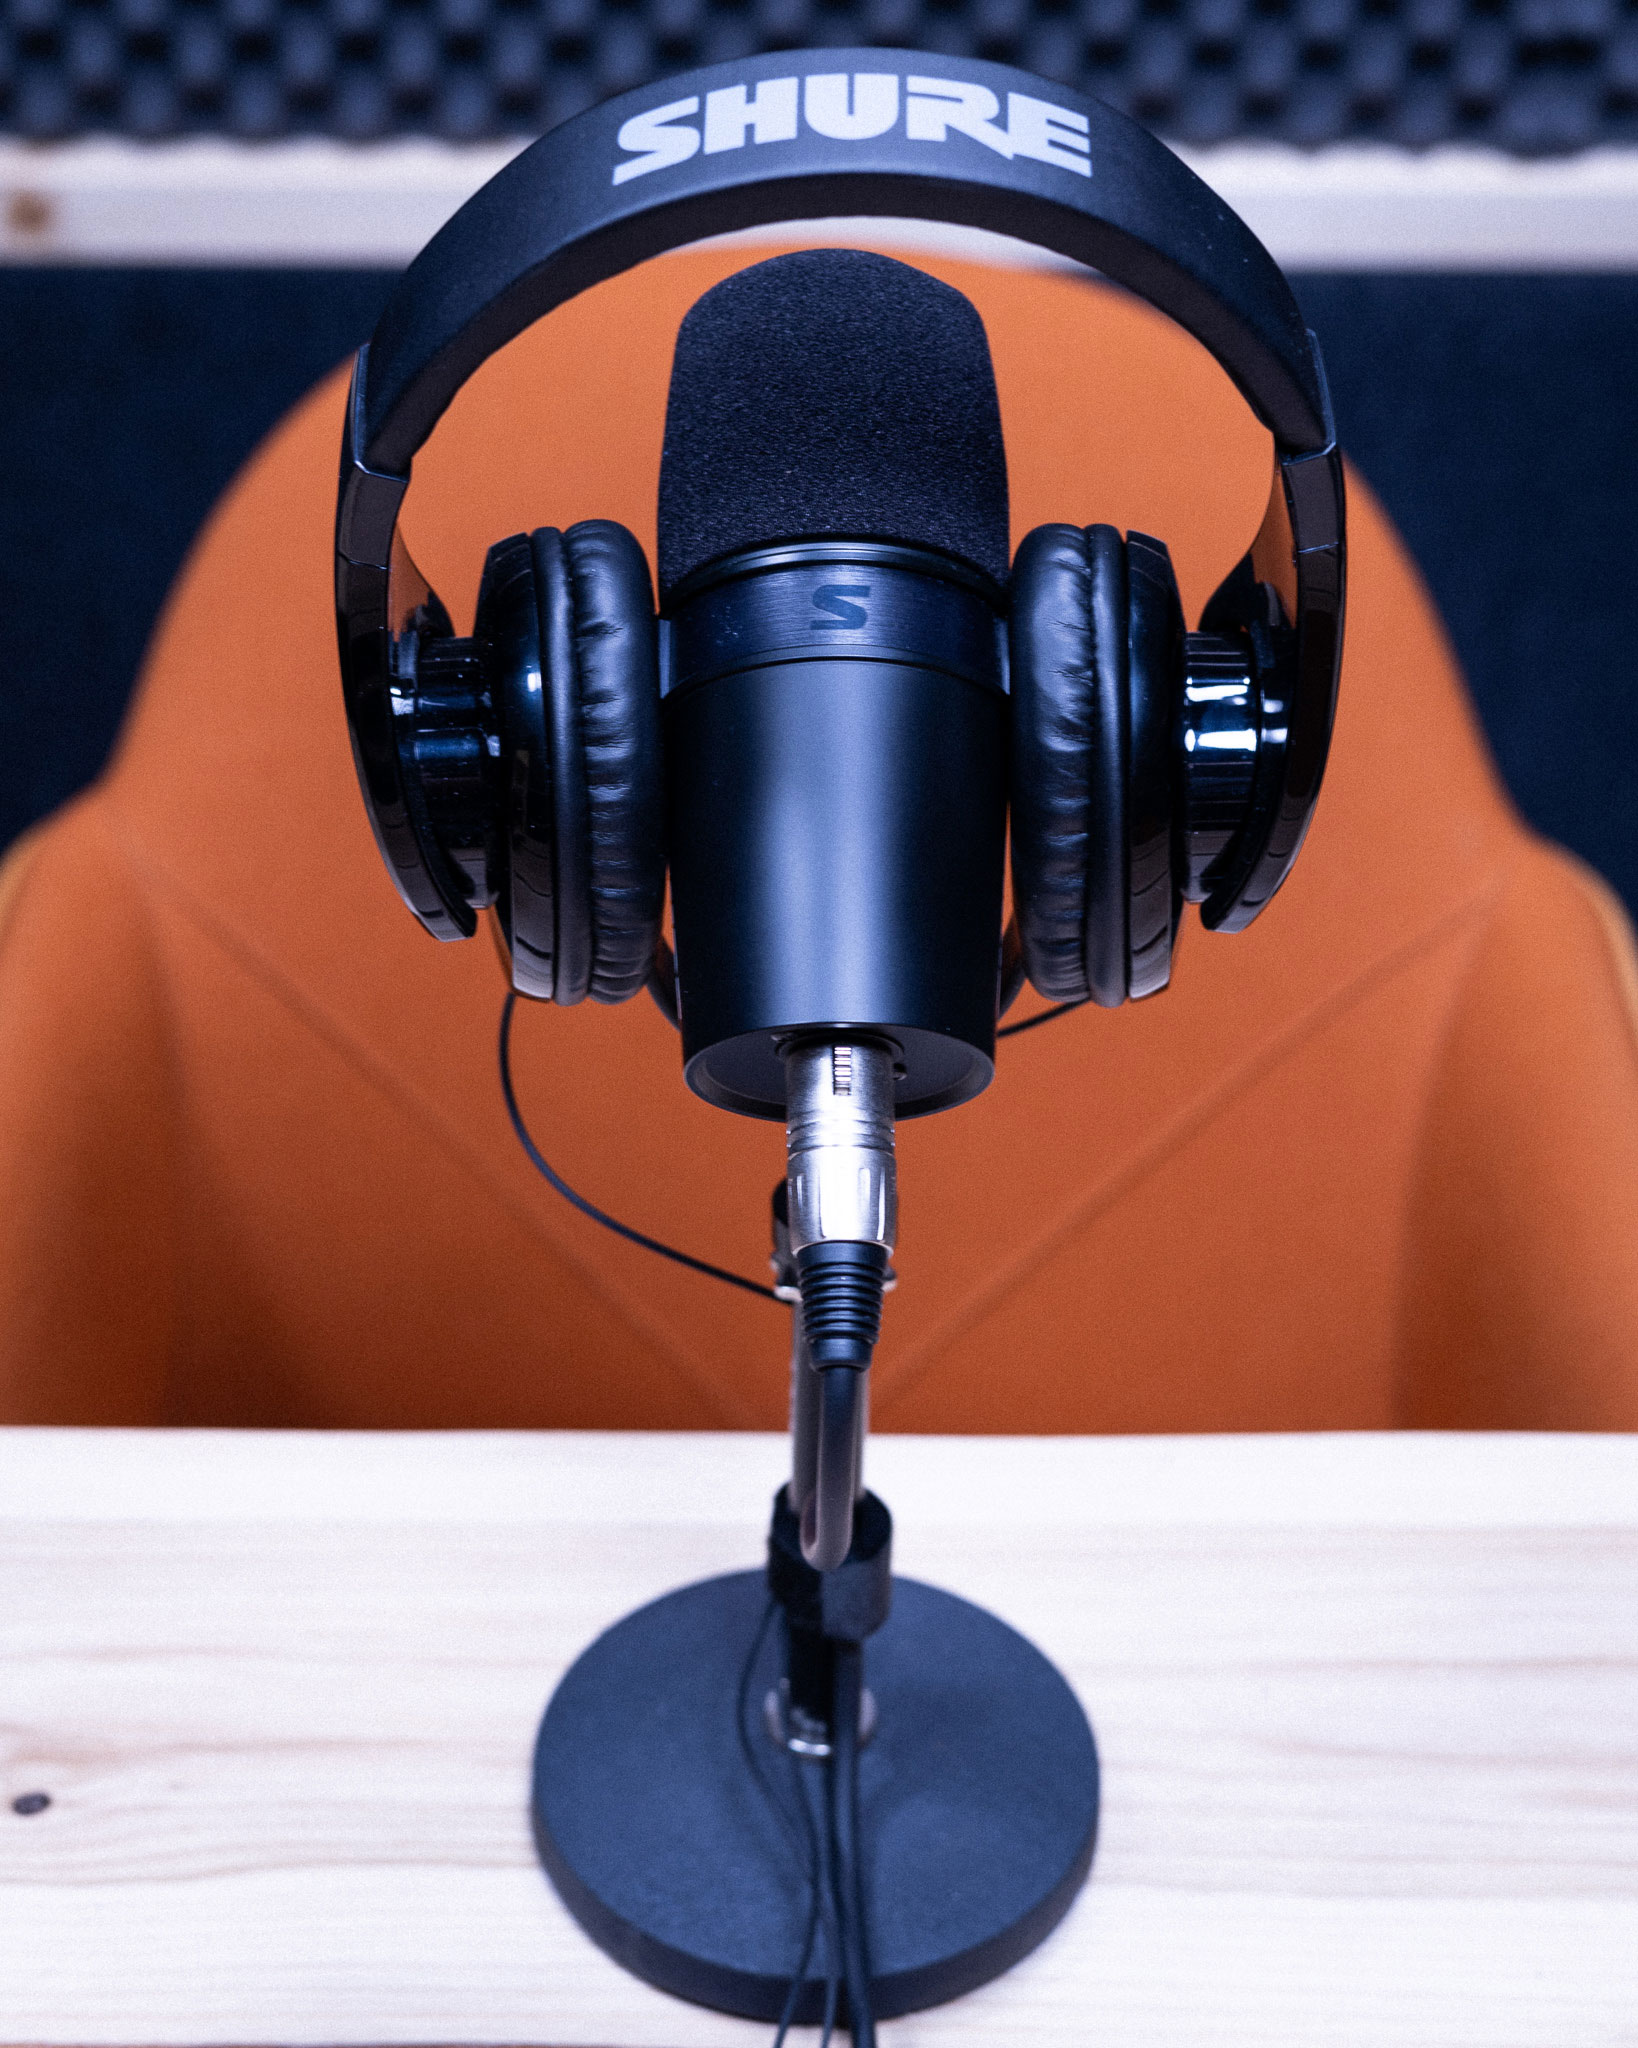 Podcastrent-heli-shure-mikrofoon-stuudio